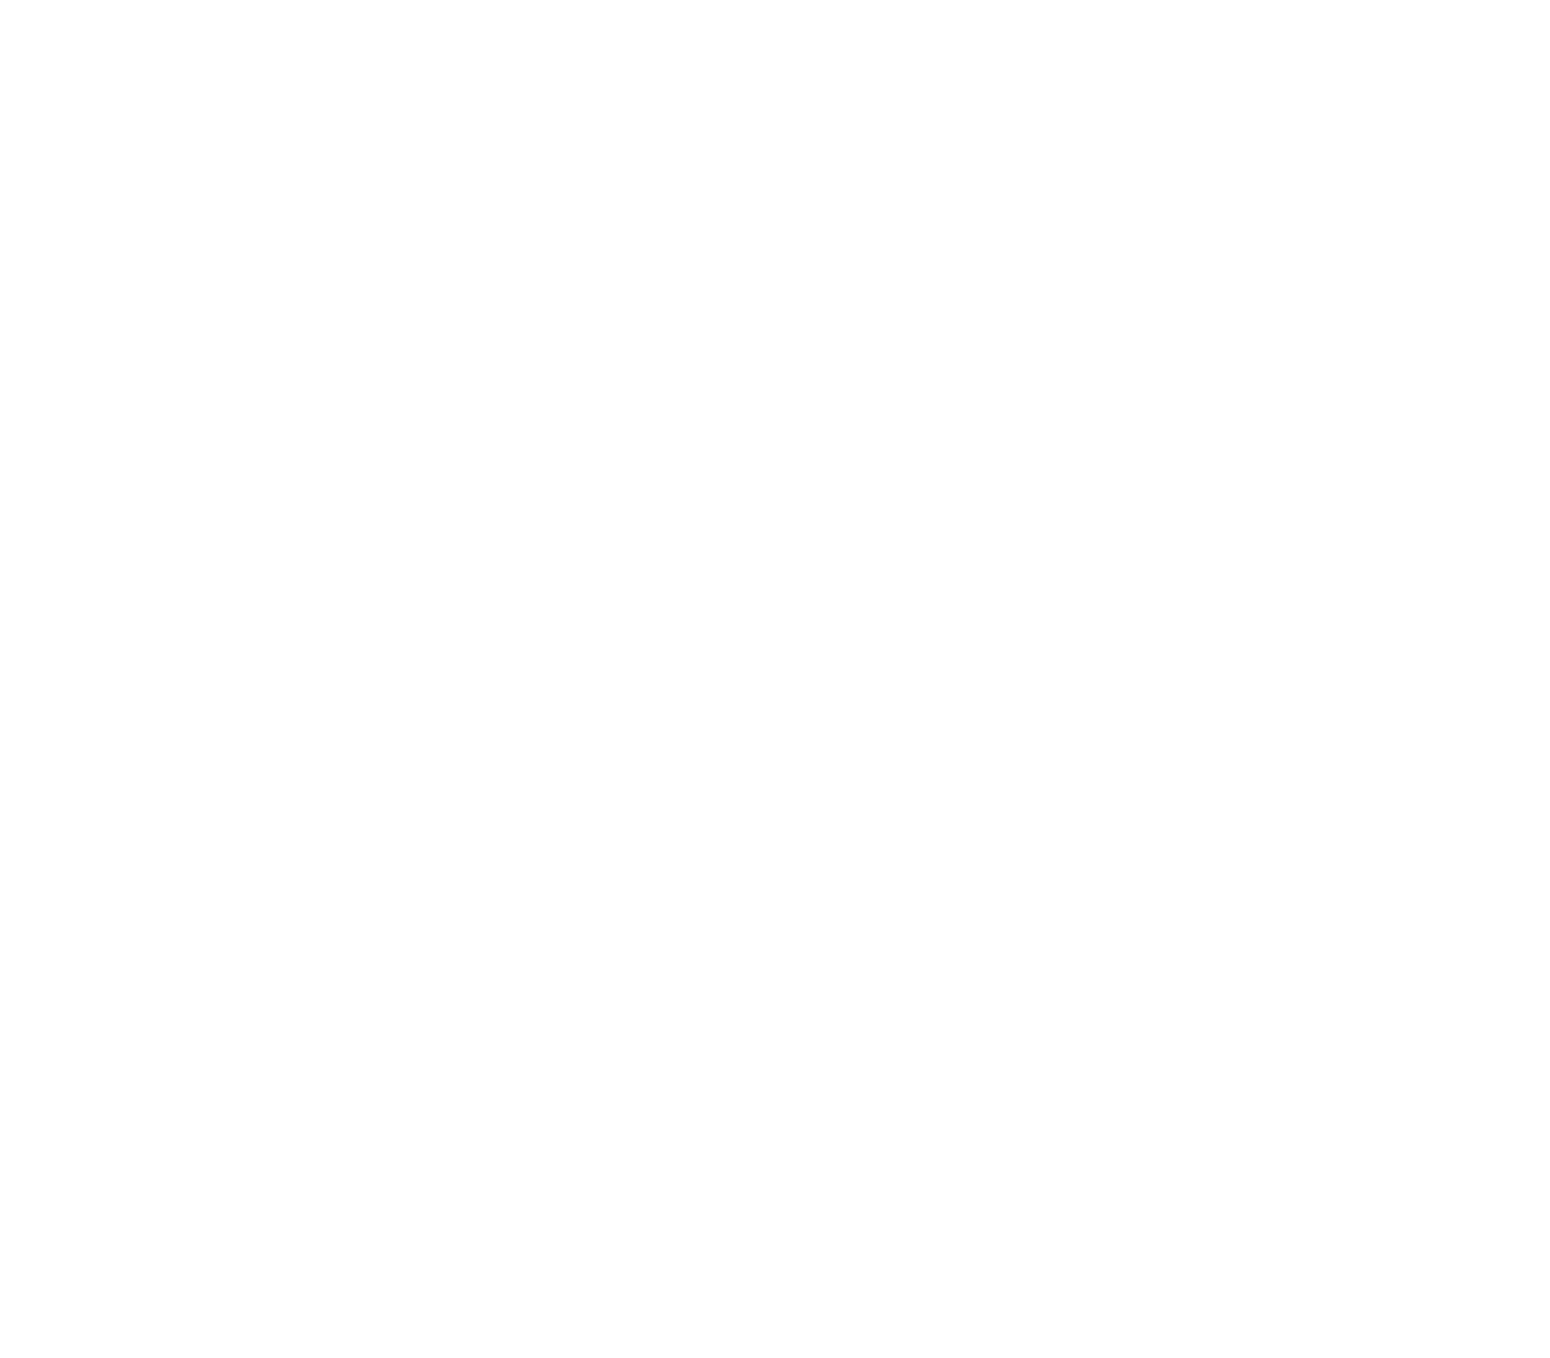 dLocal logo for dark backgrounds (transparent PNG)